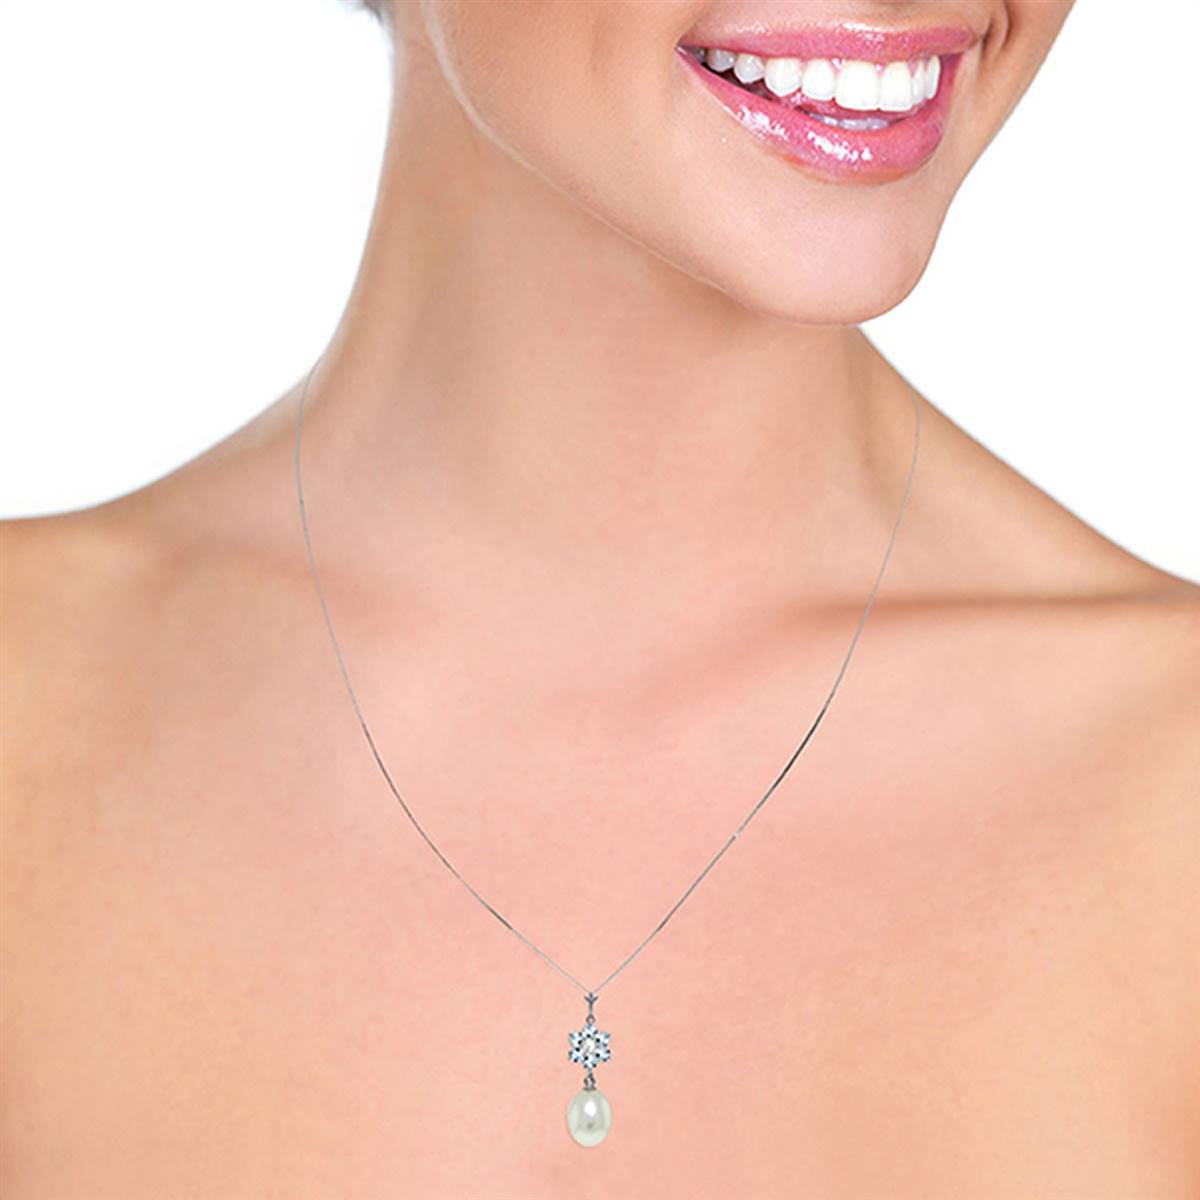 4.53 Carat 14K Solid White Gold Necklace Natural Pearl, Aquamarine Diamond